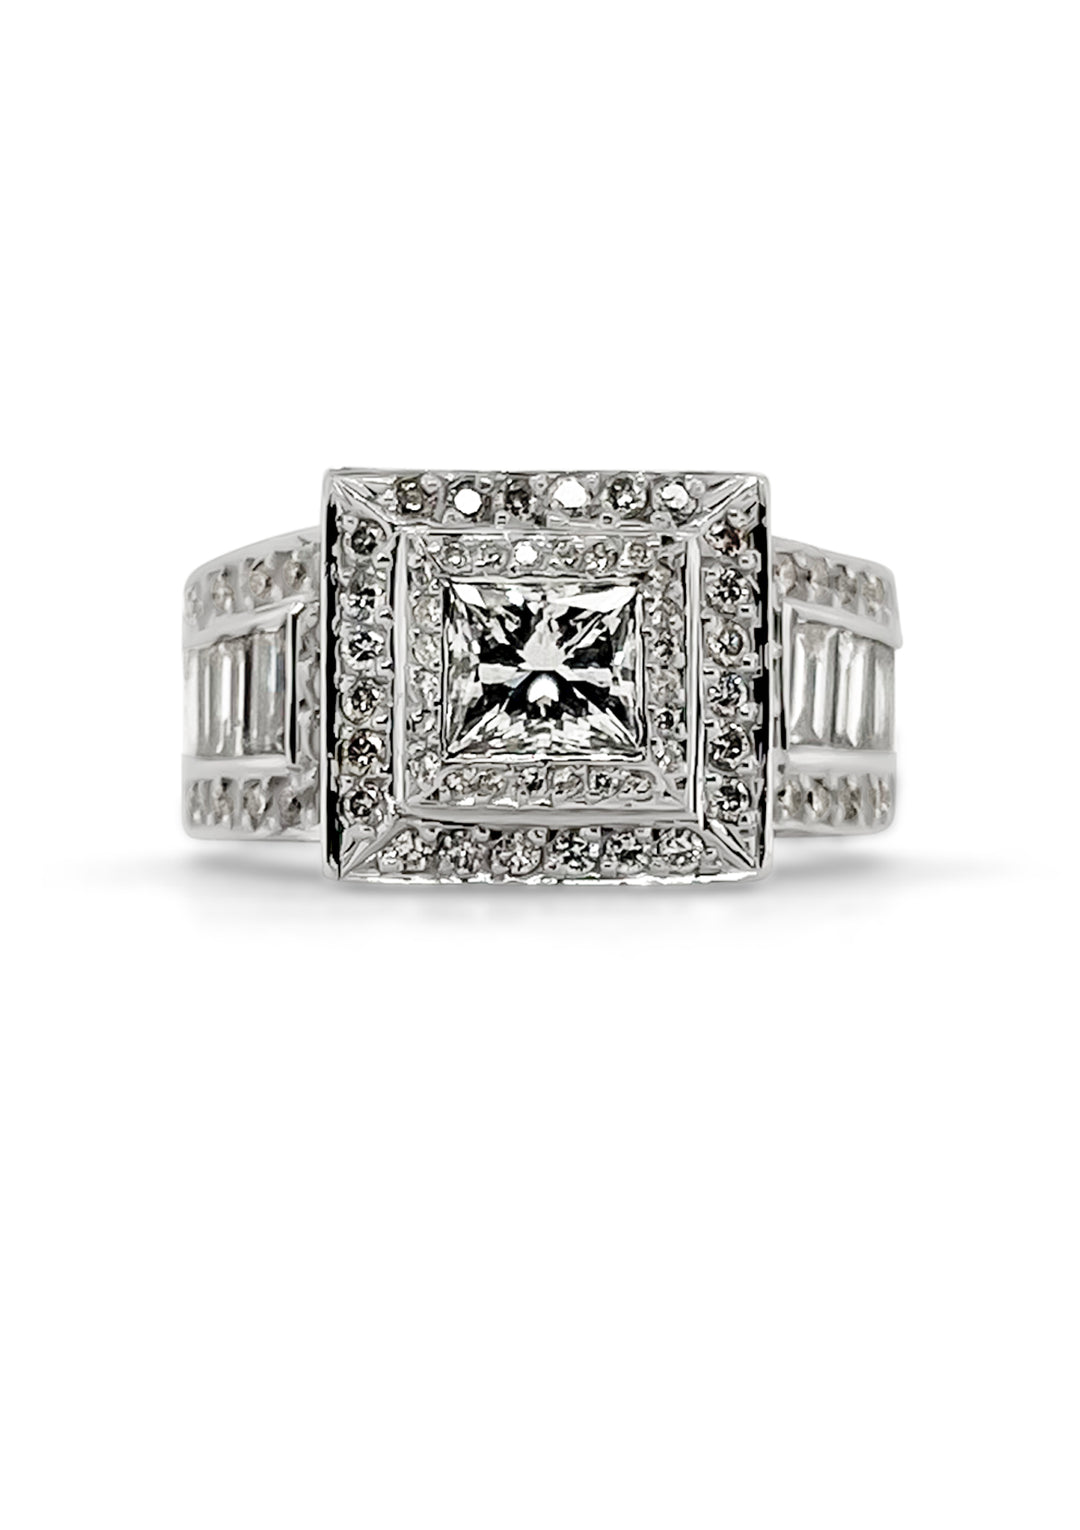 18K White Gold 0.77 Carat Princess Cut Diamond Accented Ring